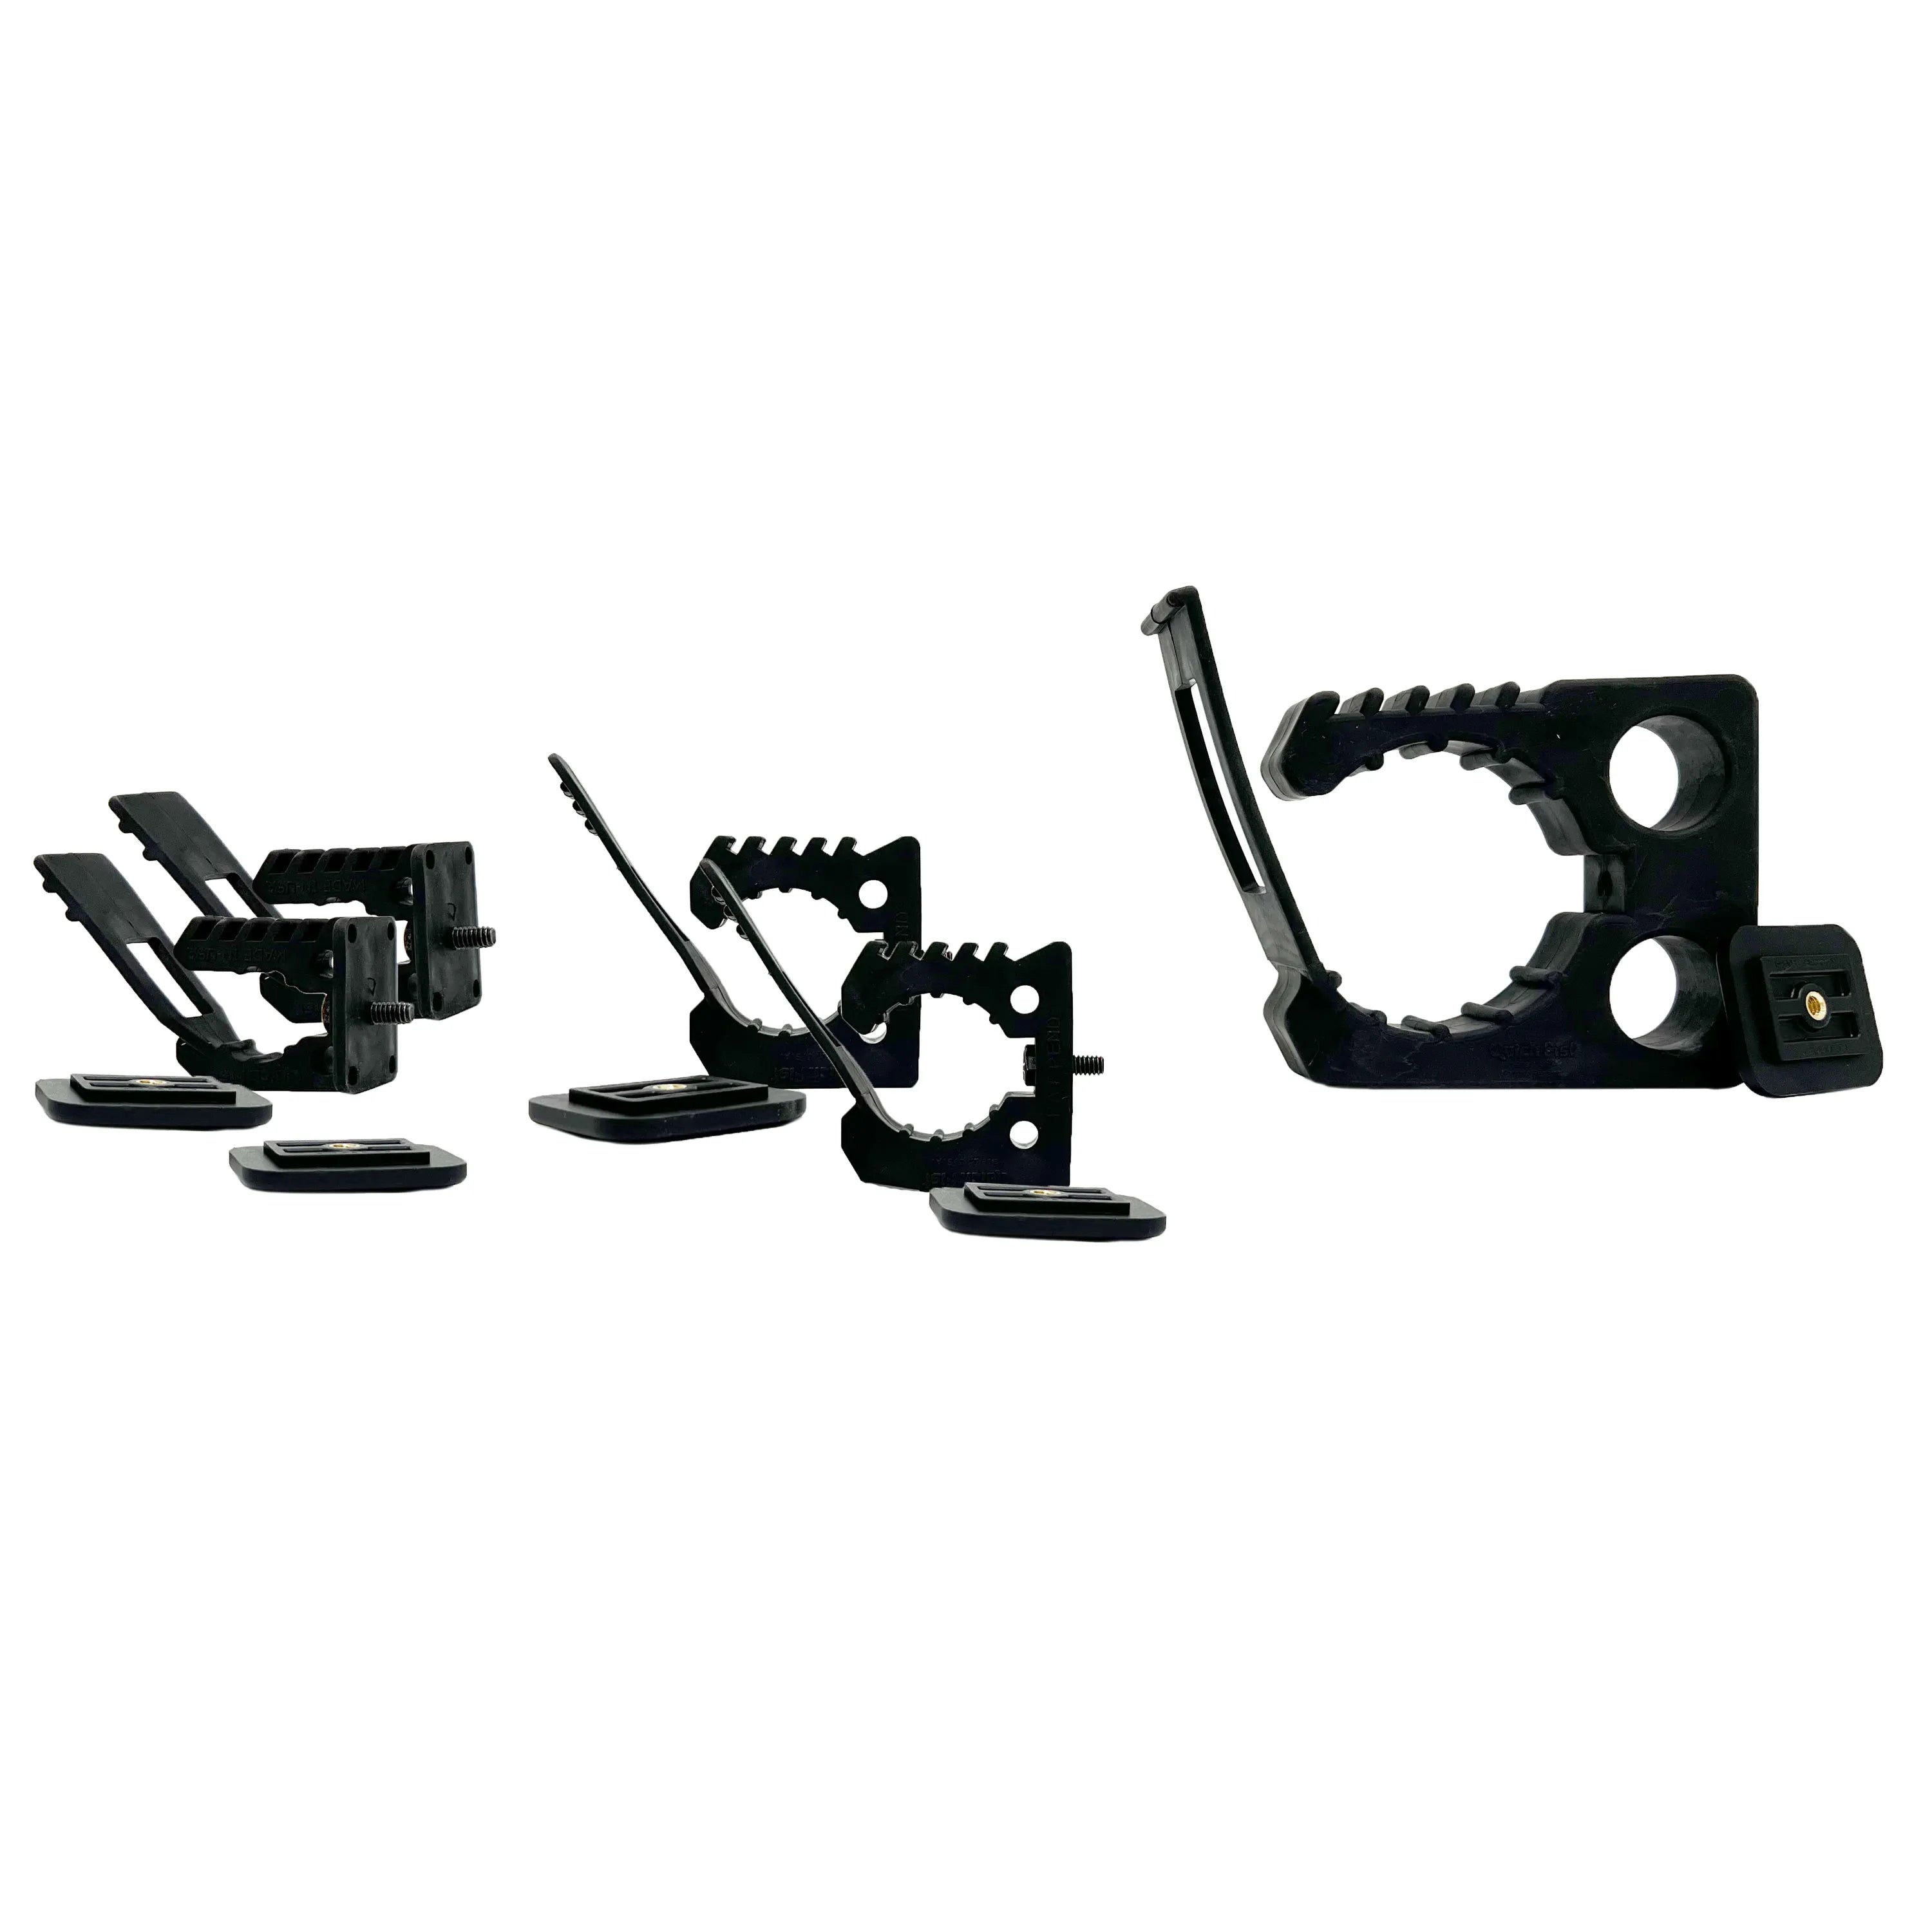 Putco Full Set of MOLLE Mount Grip kit (Set of 5 - x2 Small - x2 Medium - x1 Large)